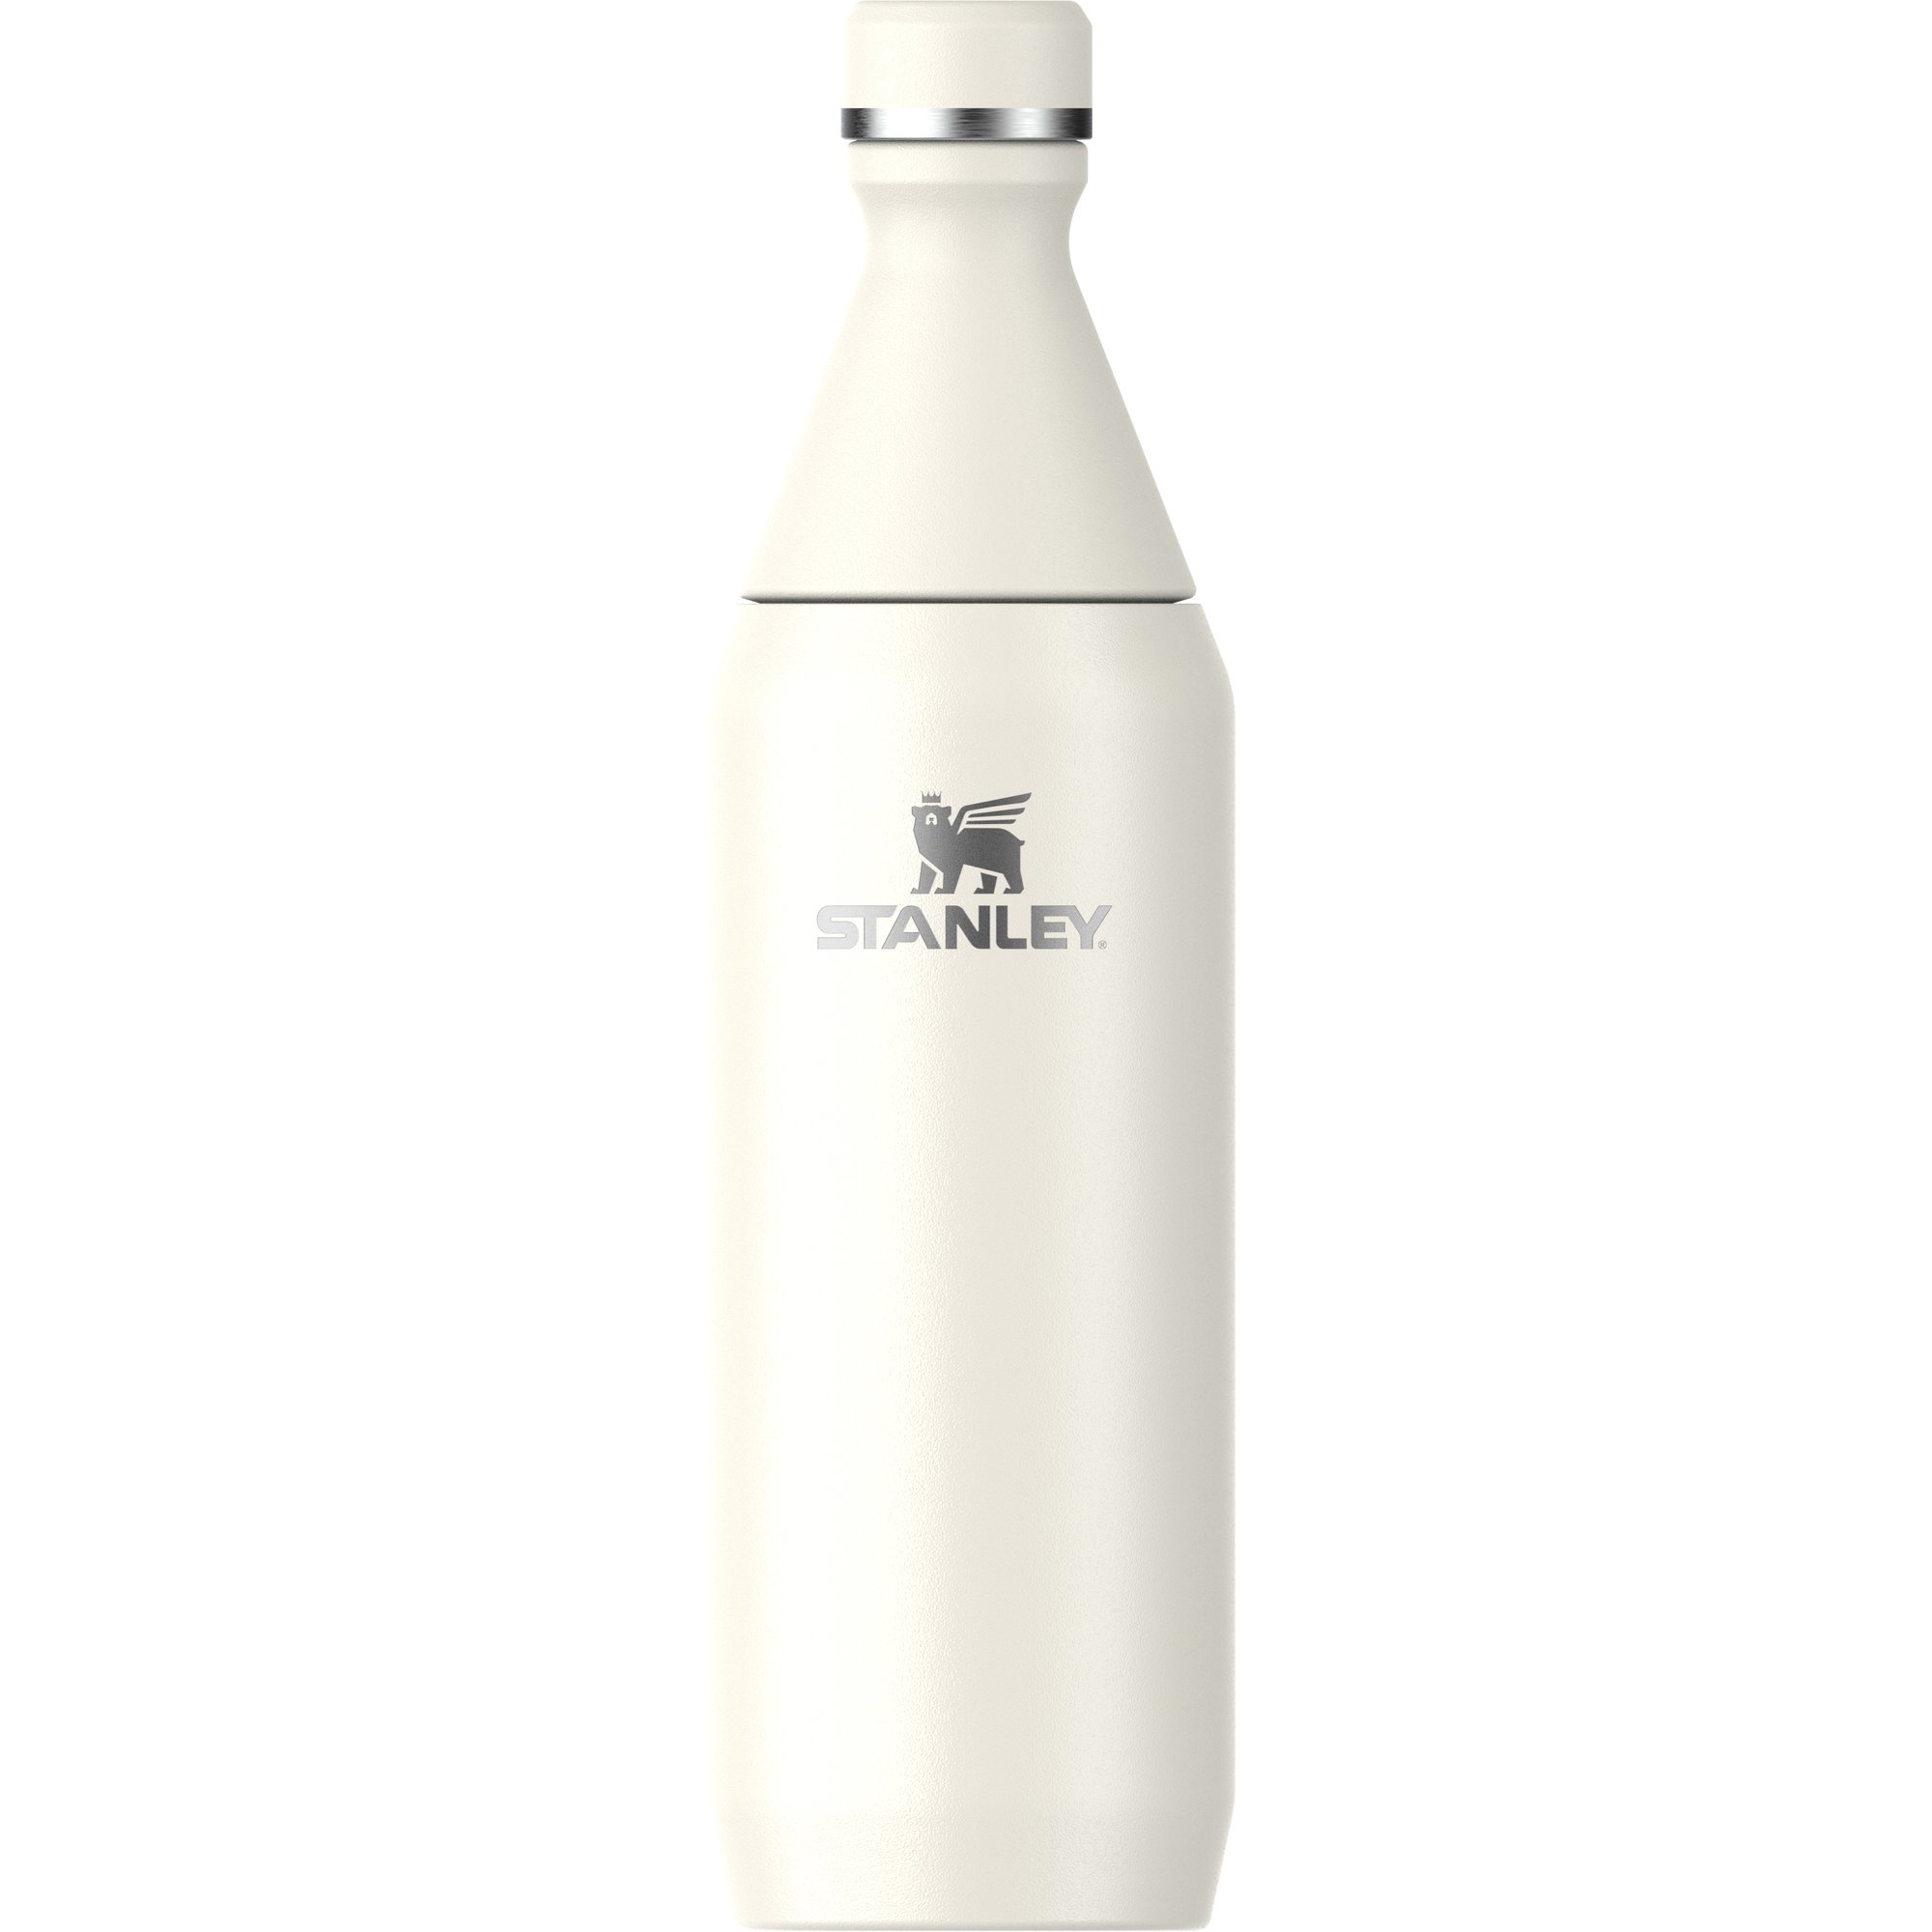 All Day Slim Bottle termoflaske 0,6 liter, cream